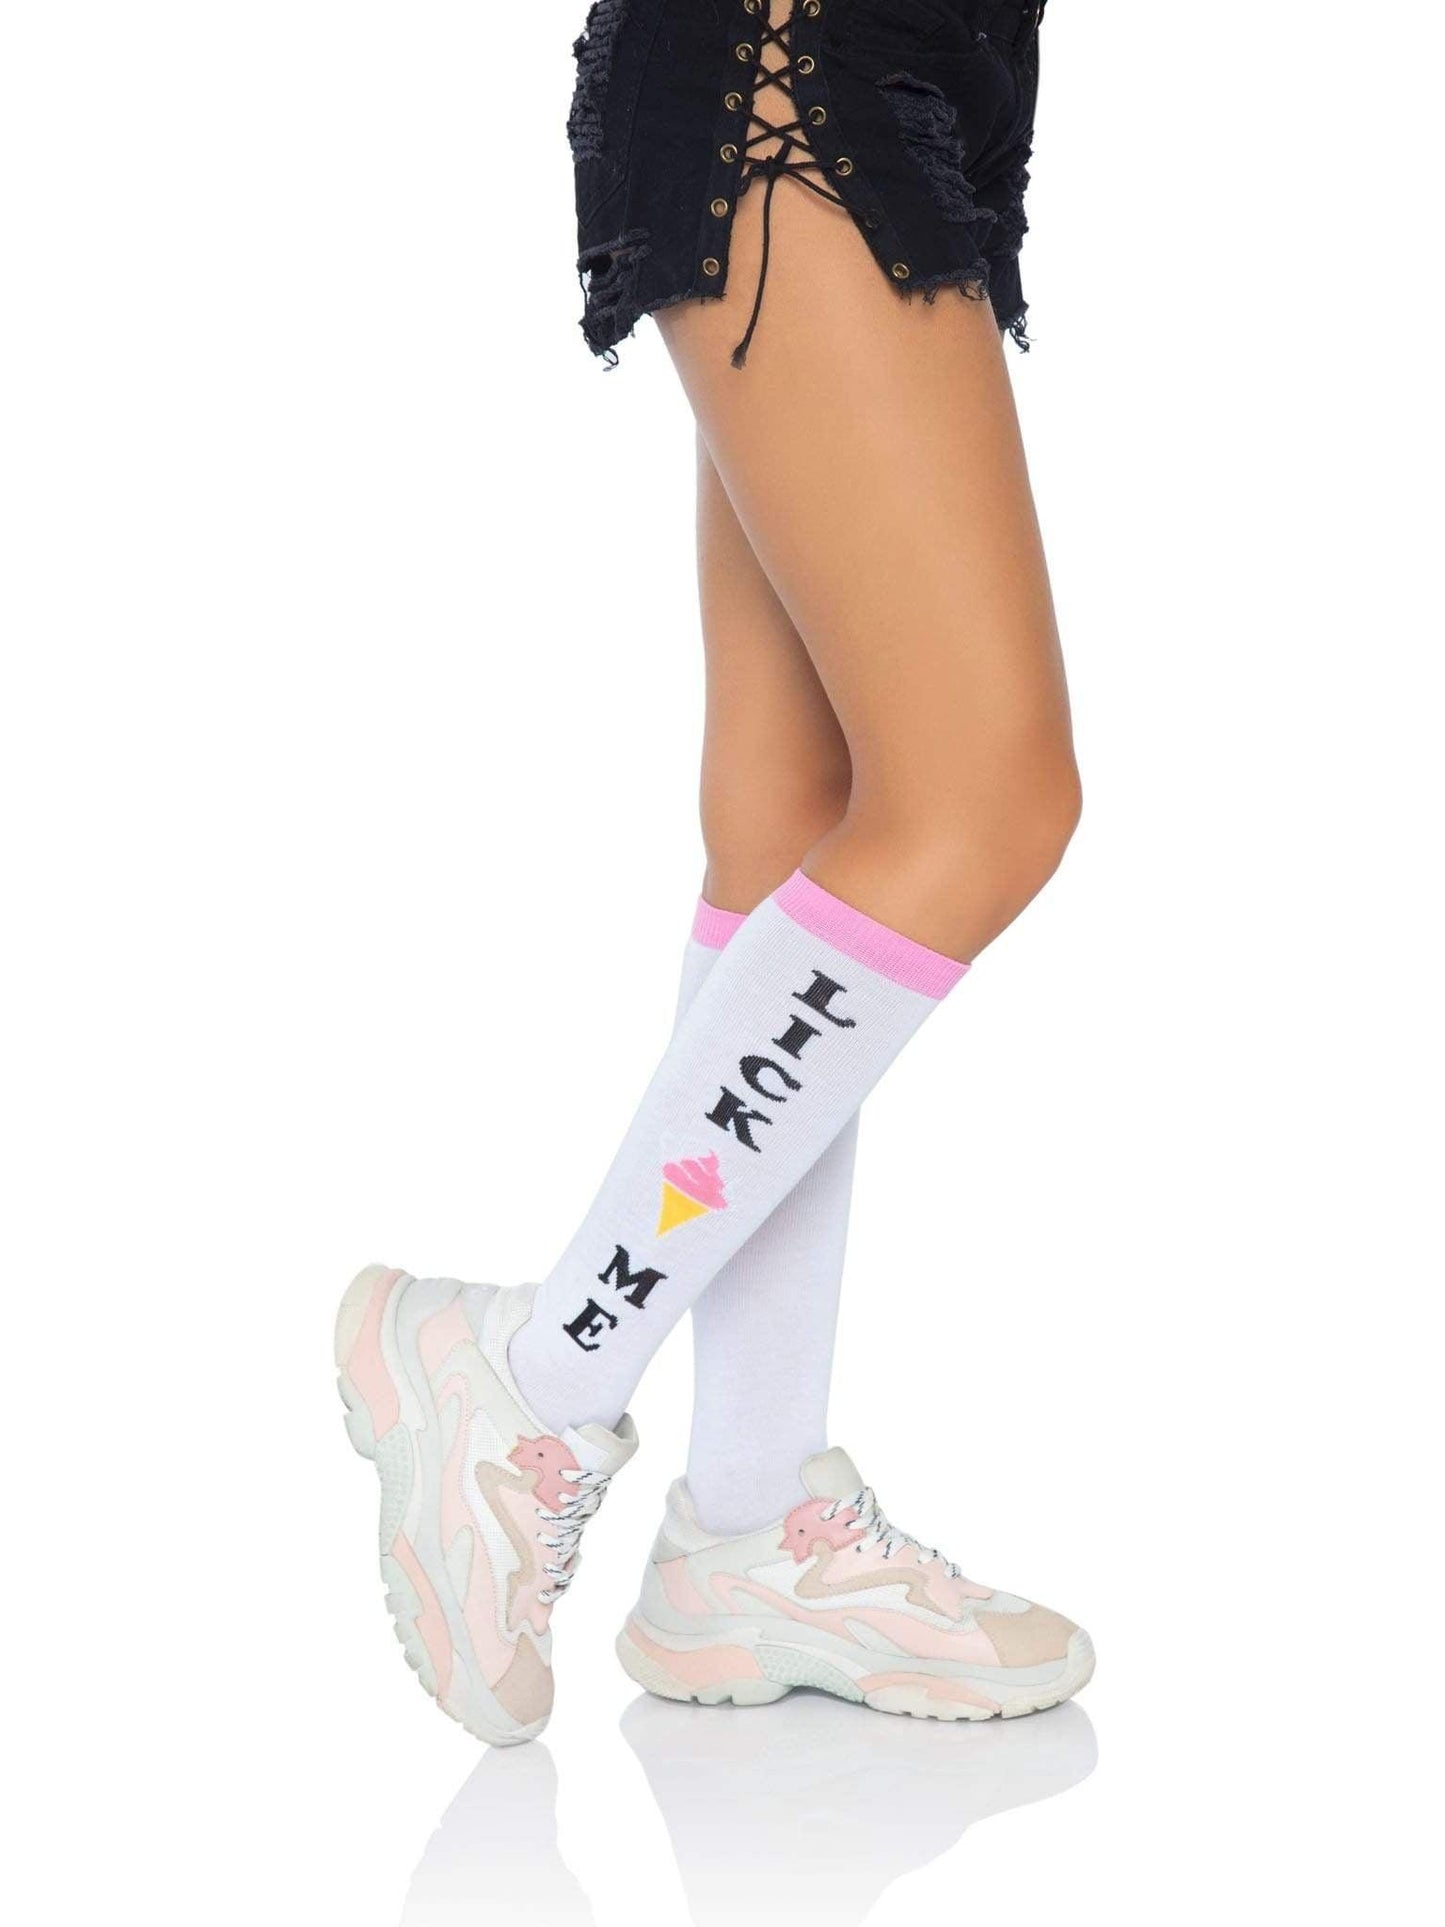 Lick Me Knee Socks - My Sex Toy Hub